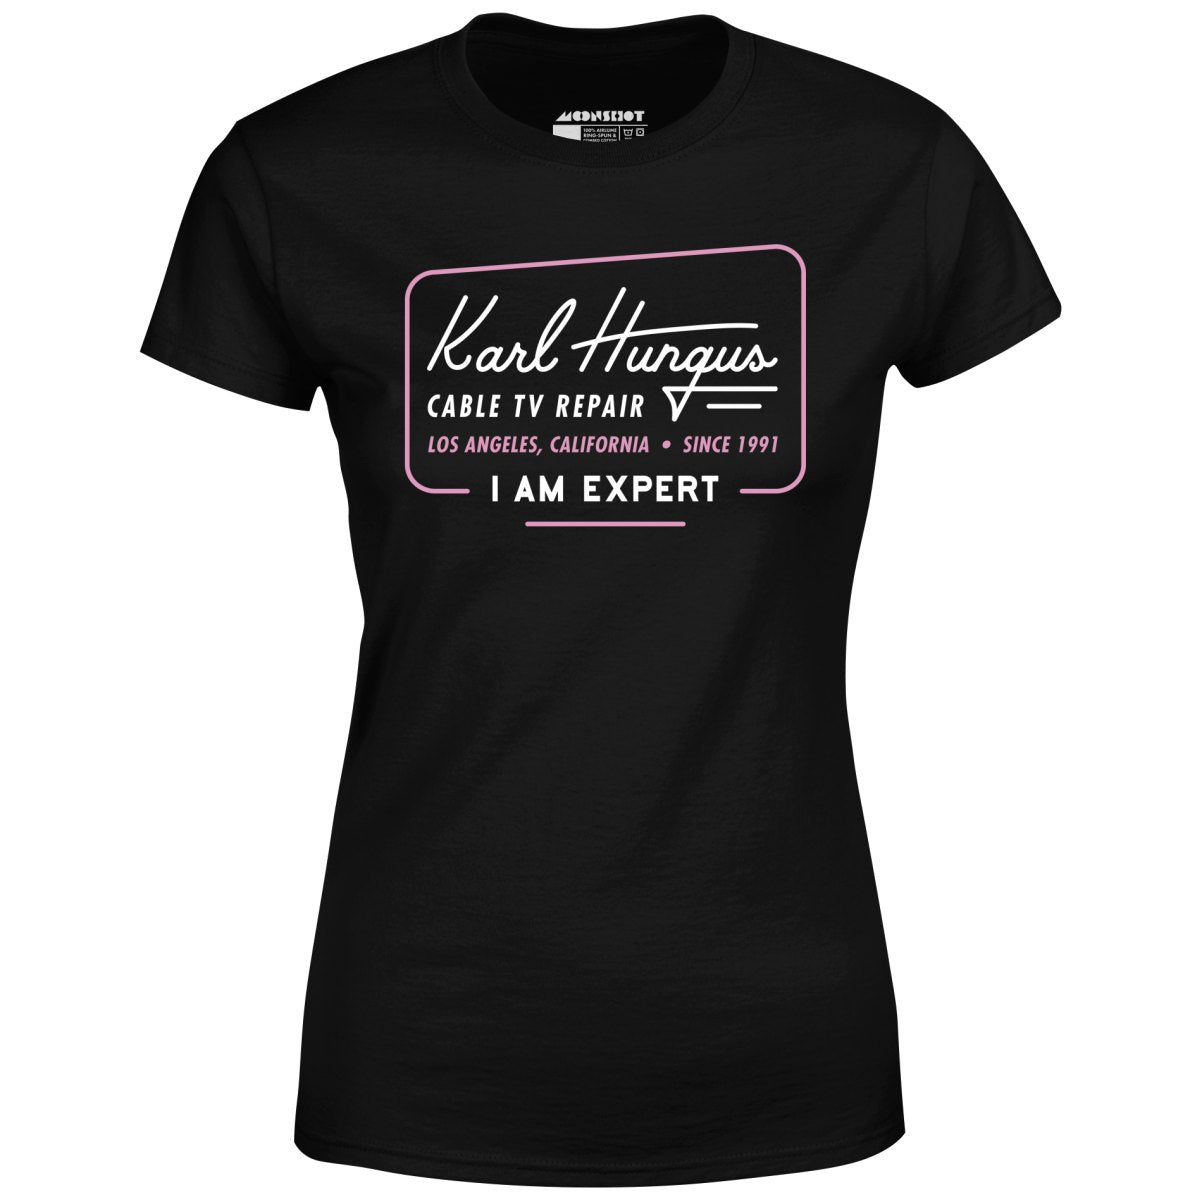 Karl Hungus Cable TV Repair - I am Expert - Women's T-Shirt